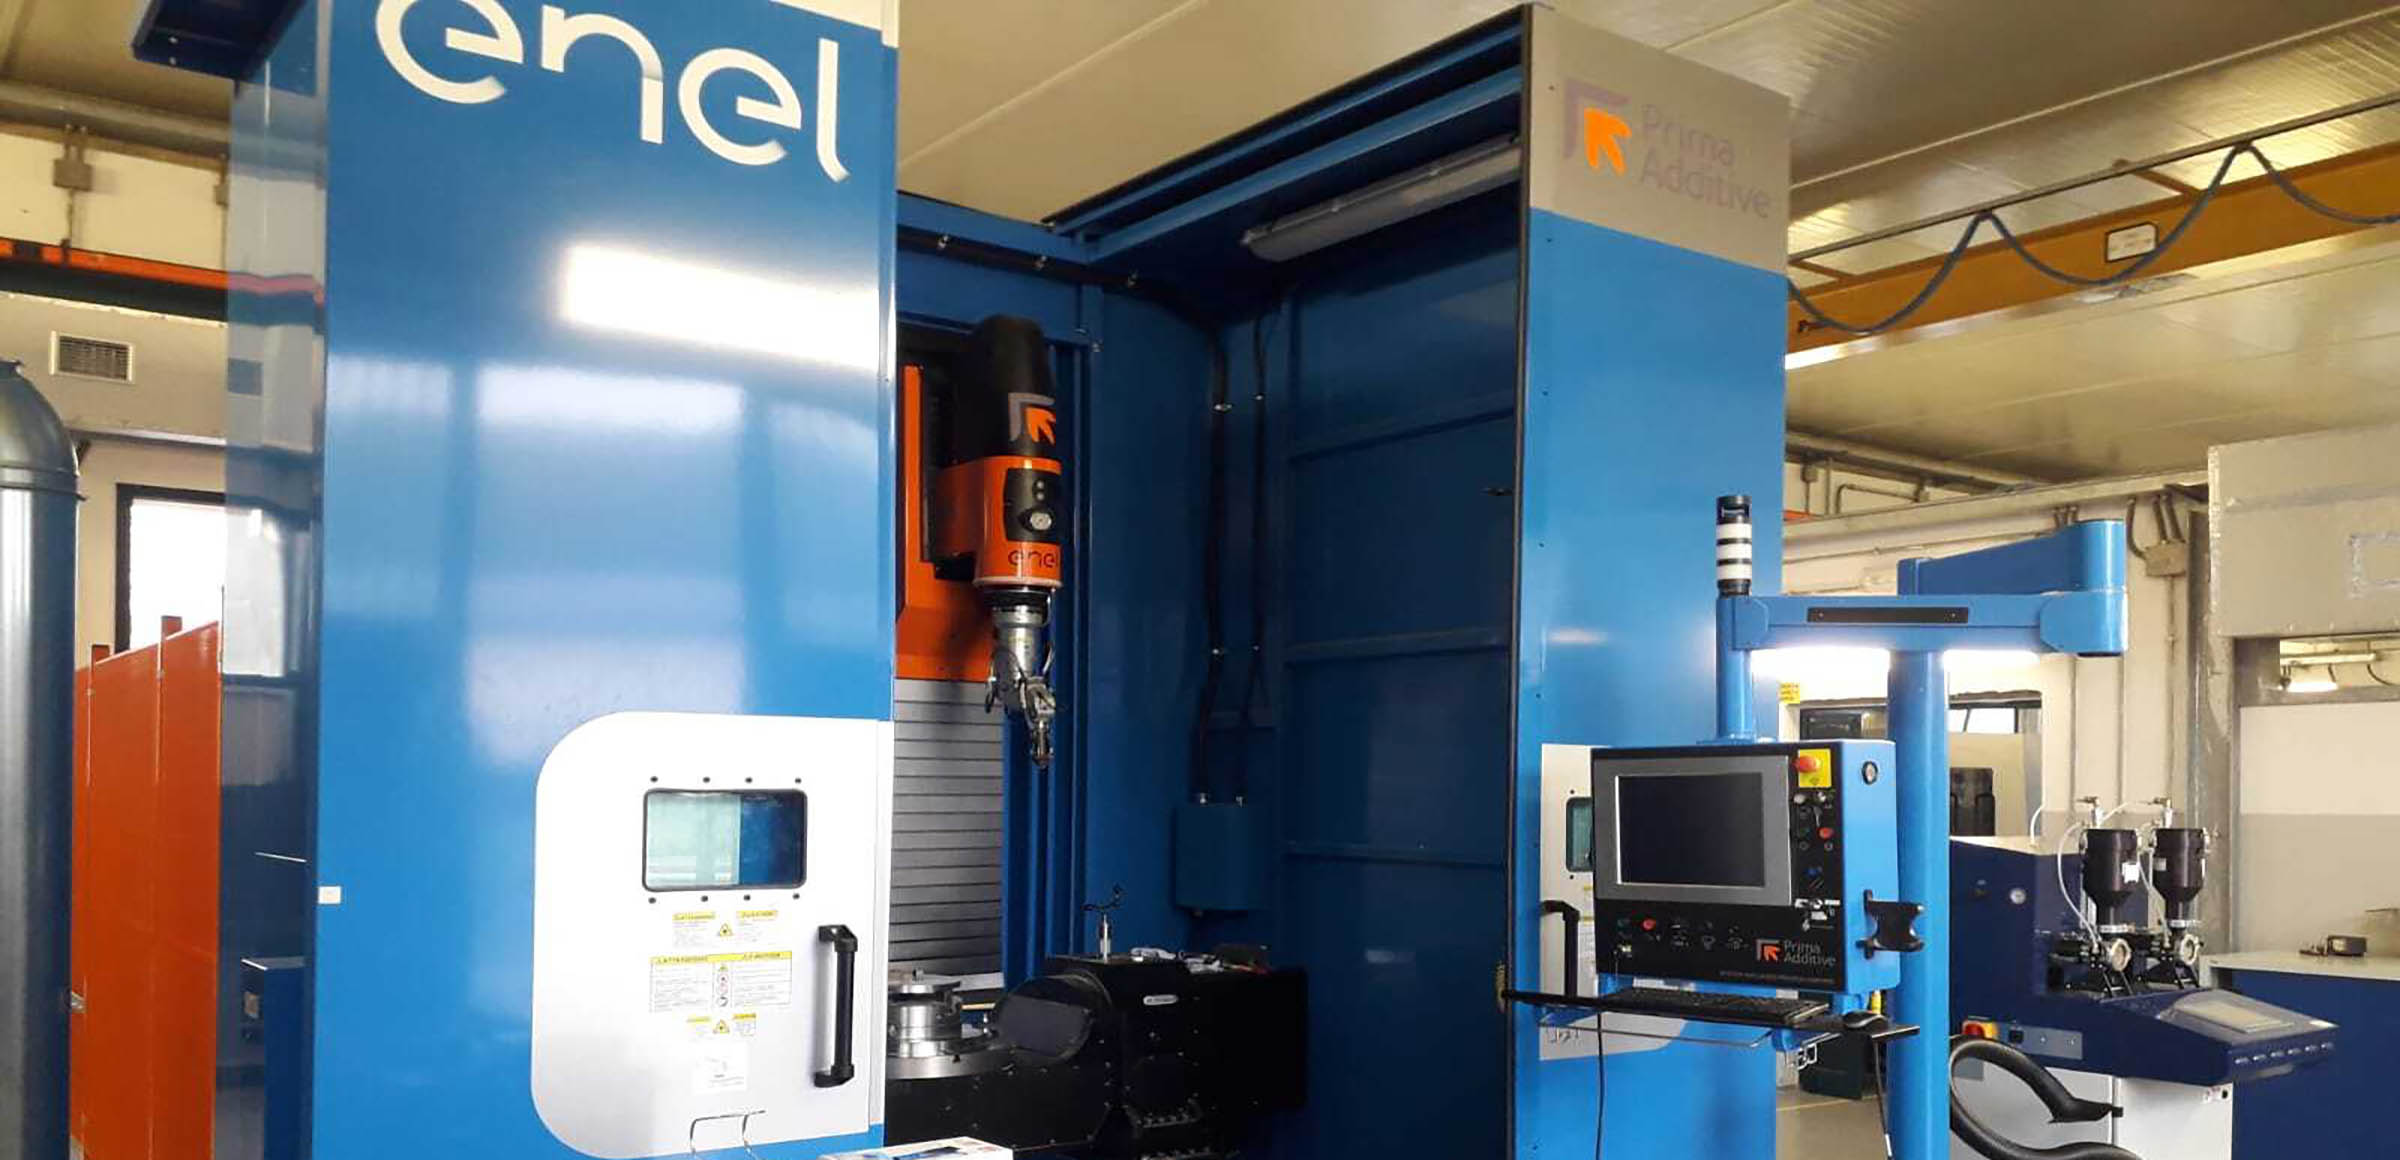 Enel的DED 3D打印机位于圣塔芭芭拉冶金实验室。通过Enel Green Power的照片。